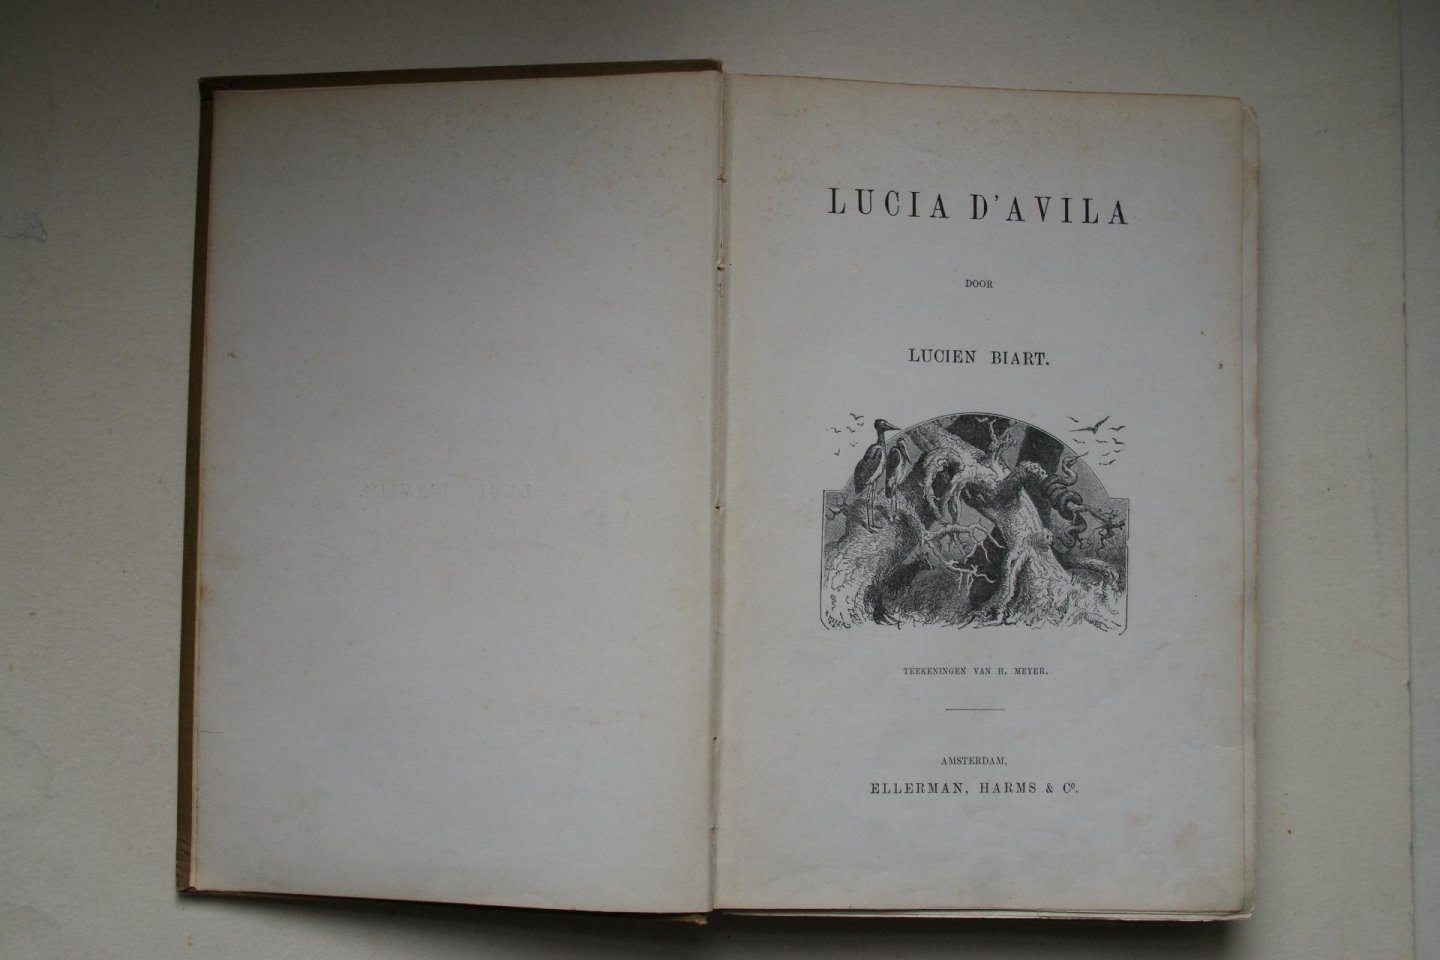 Biart, Lucien - LUCIA D'AVILA  met tekeningen van H. Meyer